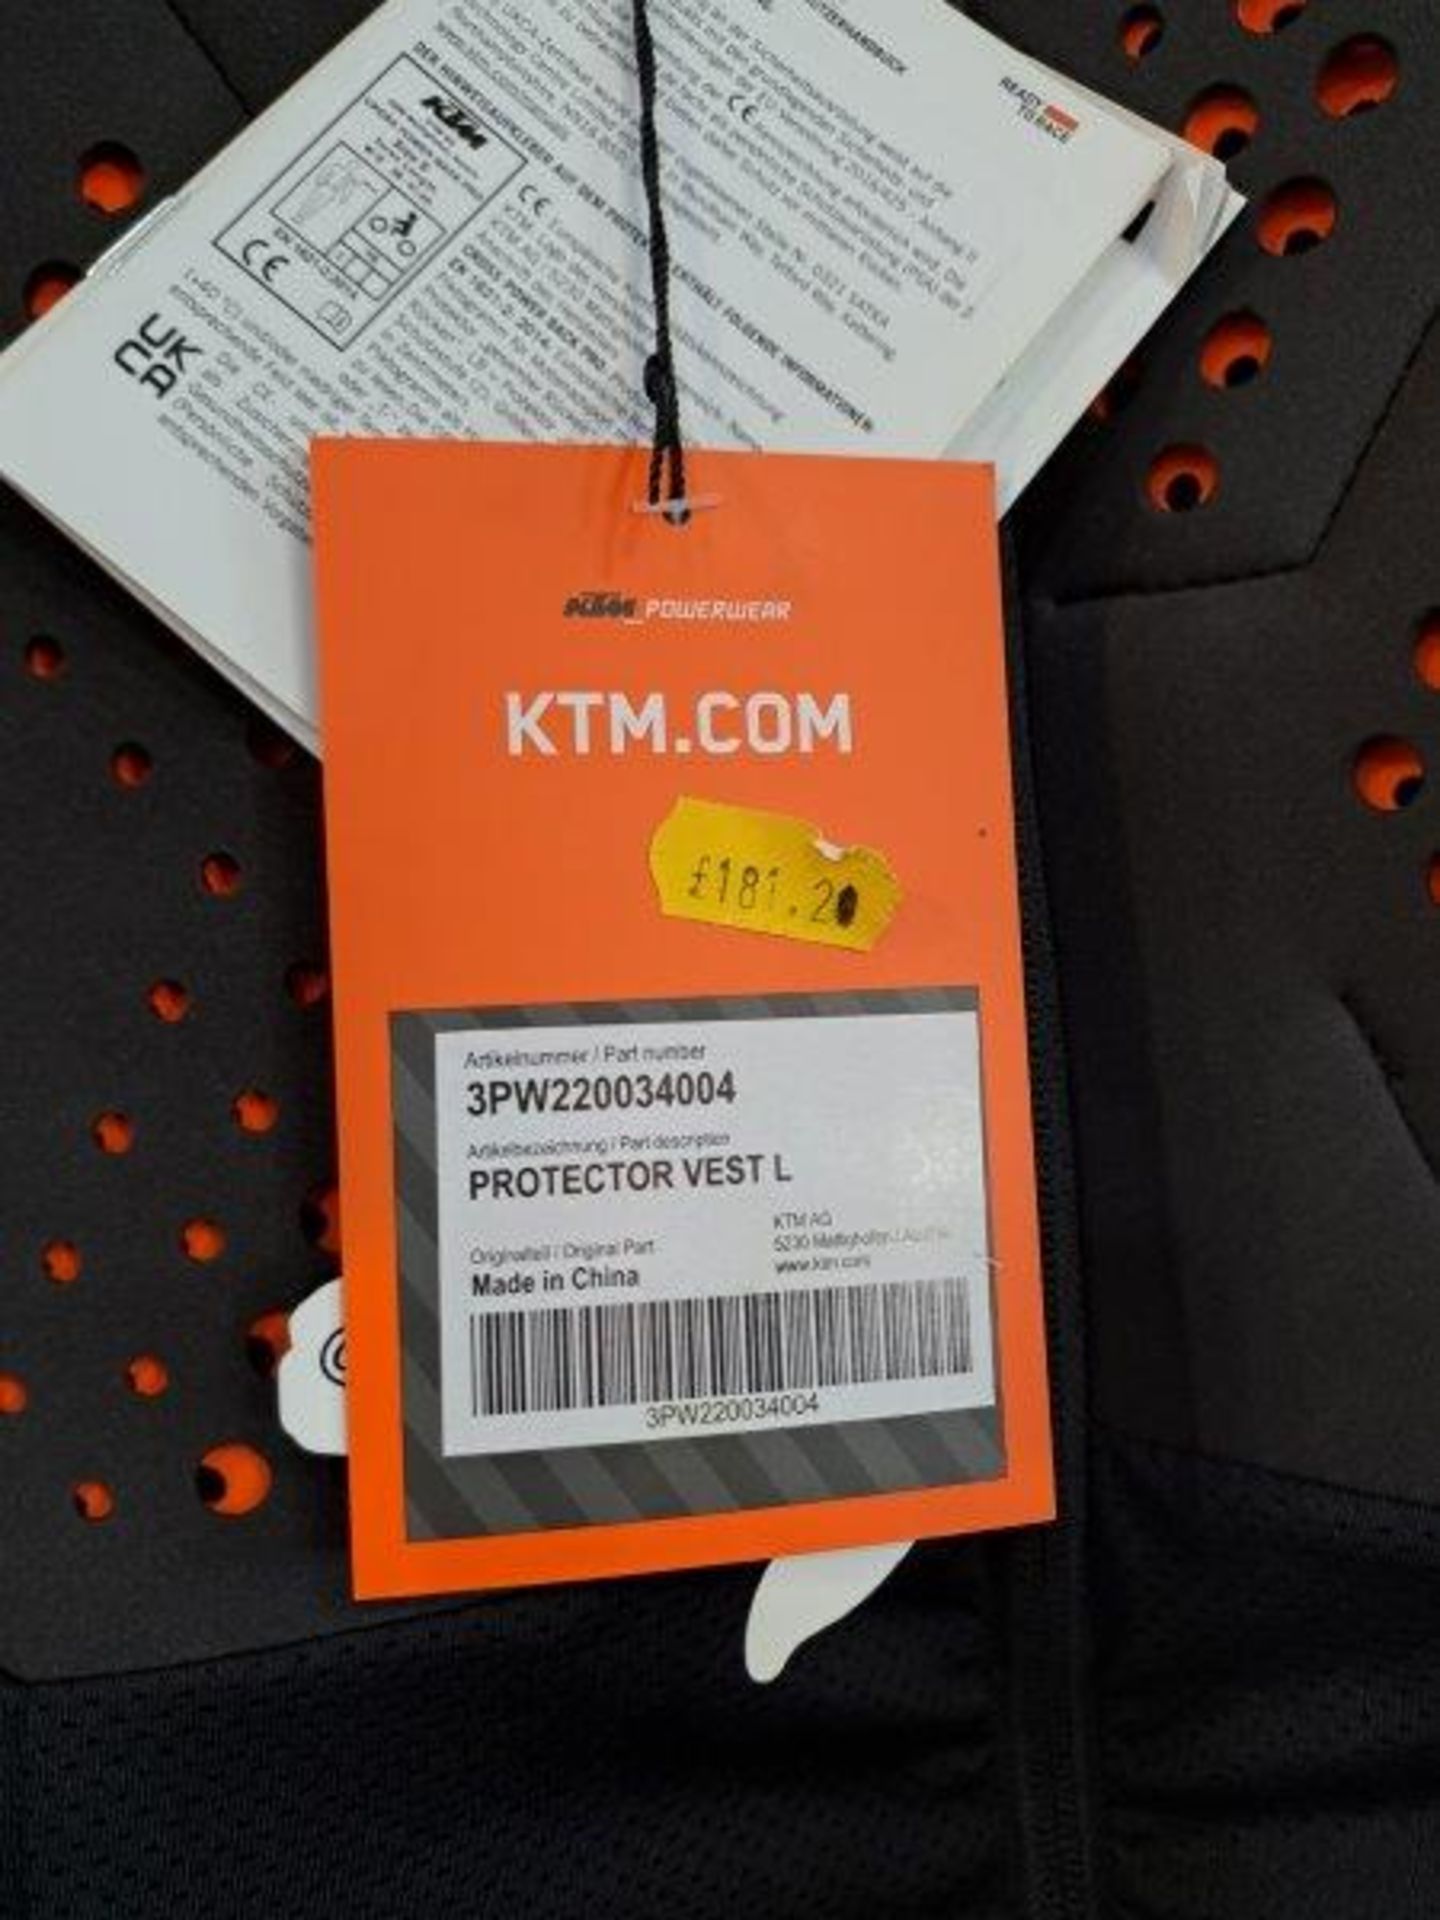 KTM Protector Vest L Body Protector - Image 2 of 5